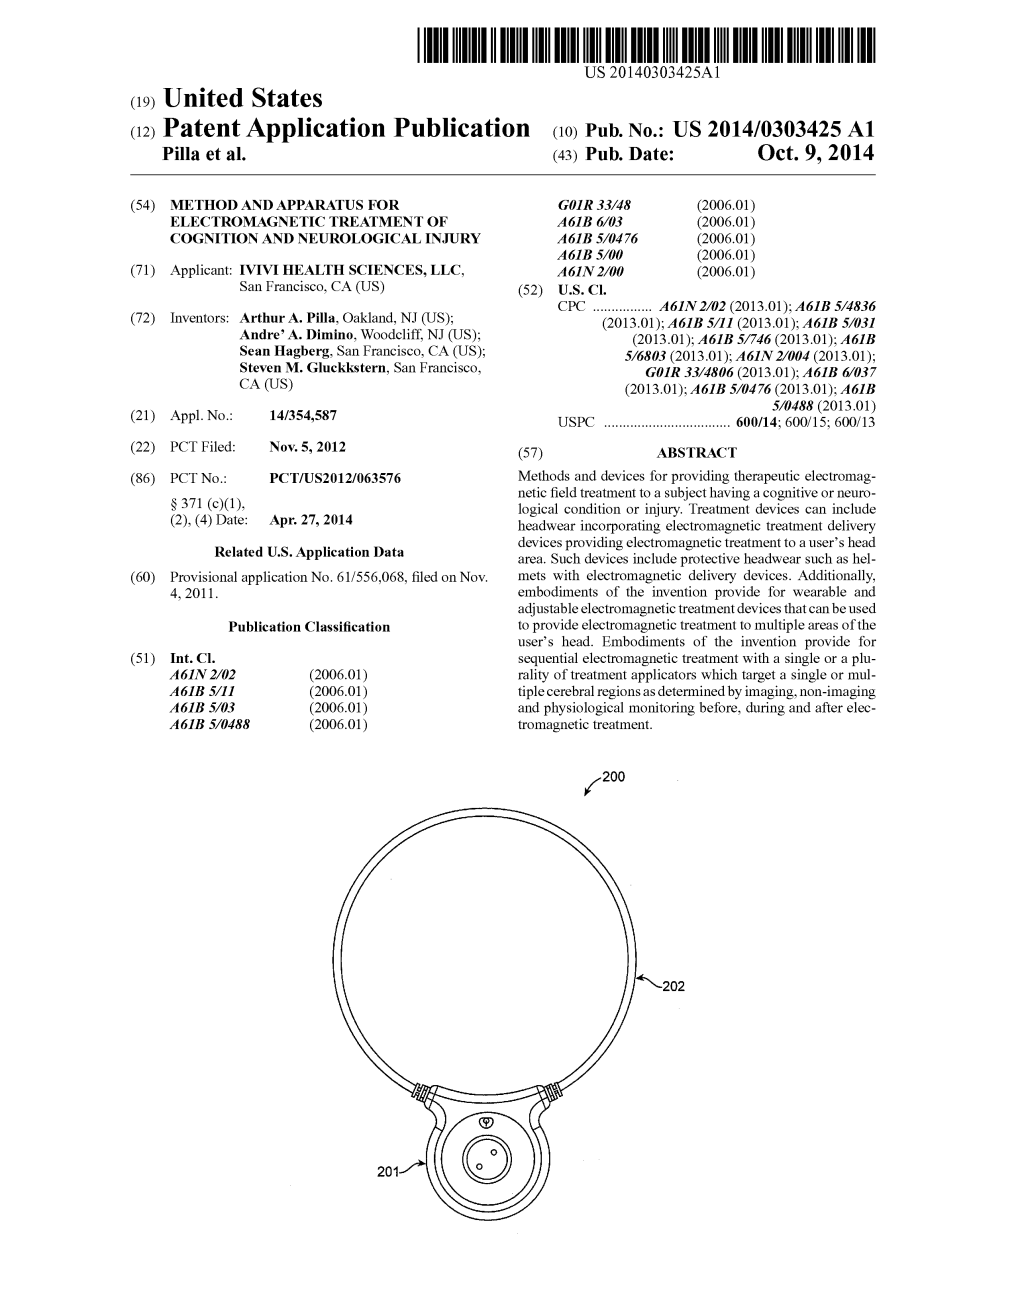 (12) Patent Application Publication (10) Pub. No.: US 2014/0303425 A1 Pilla Et Al